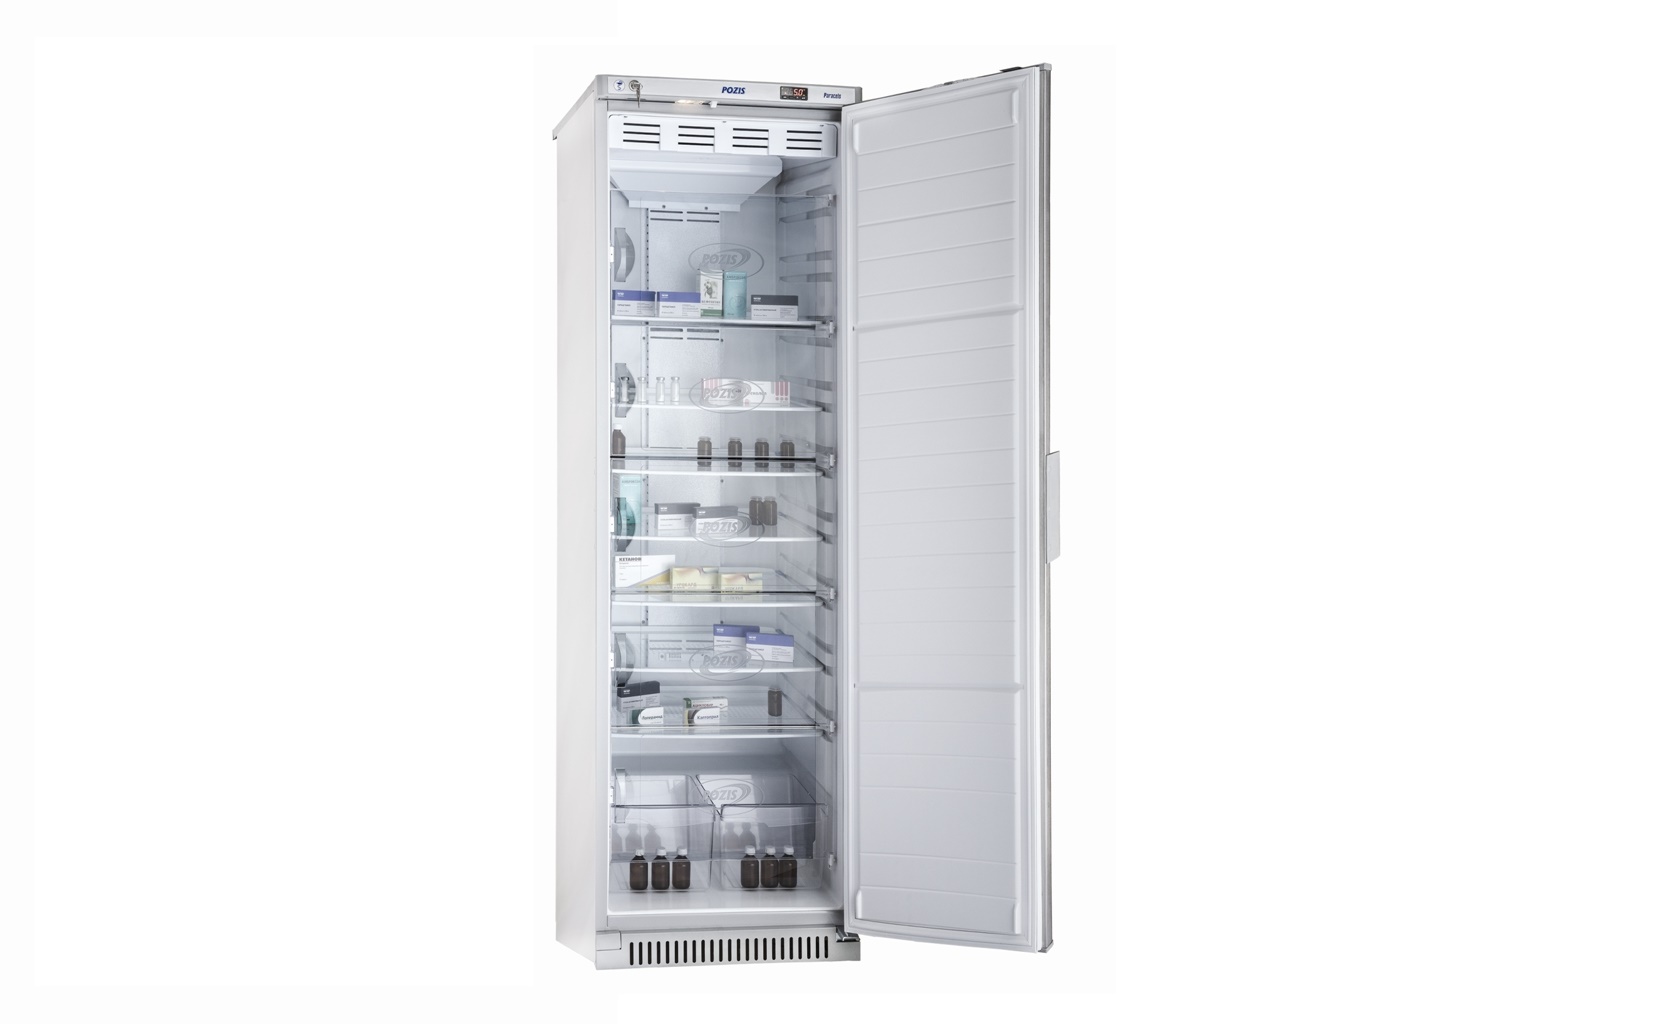 Pharmaceutical refrigerator HF-400-2 